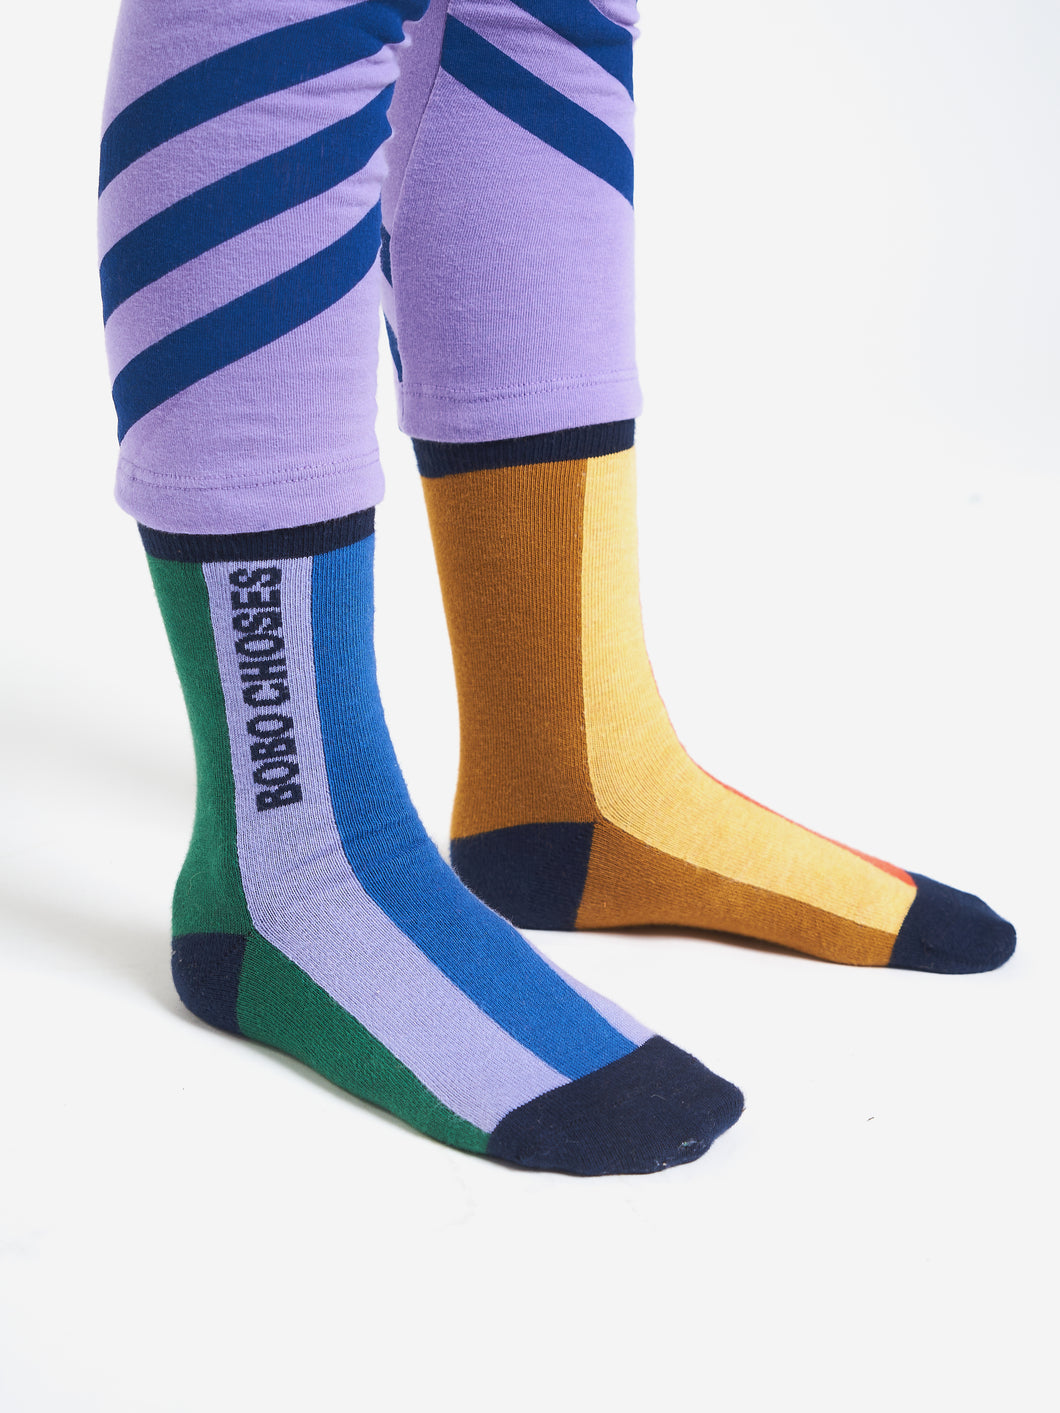 Multi color stripes long socks / ボボショーズ キッズソックス 子供用靴下 マルチカラー